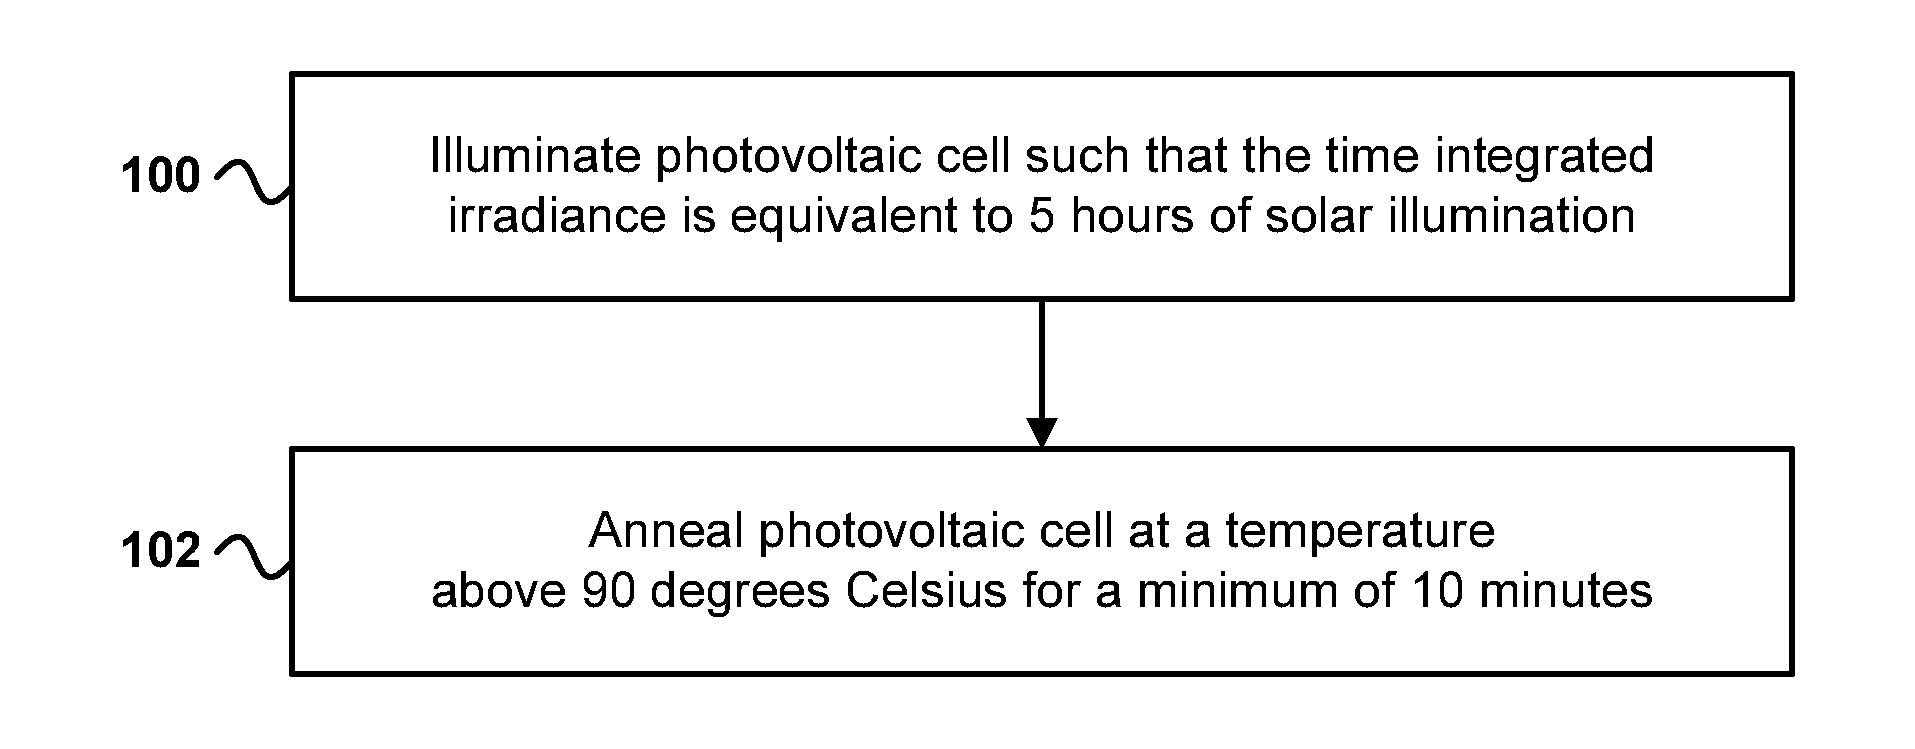 Regeneration method for restoring photovoltaic cell efficiency